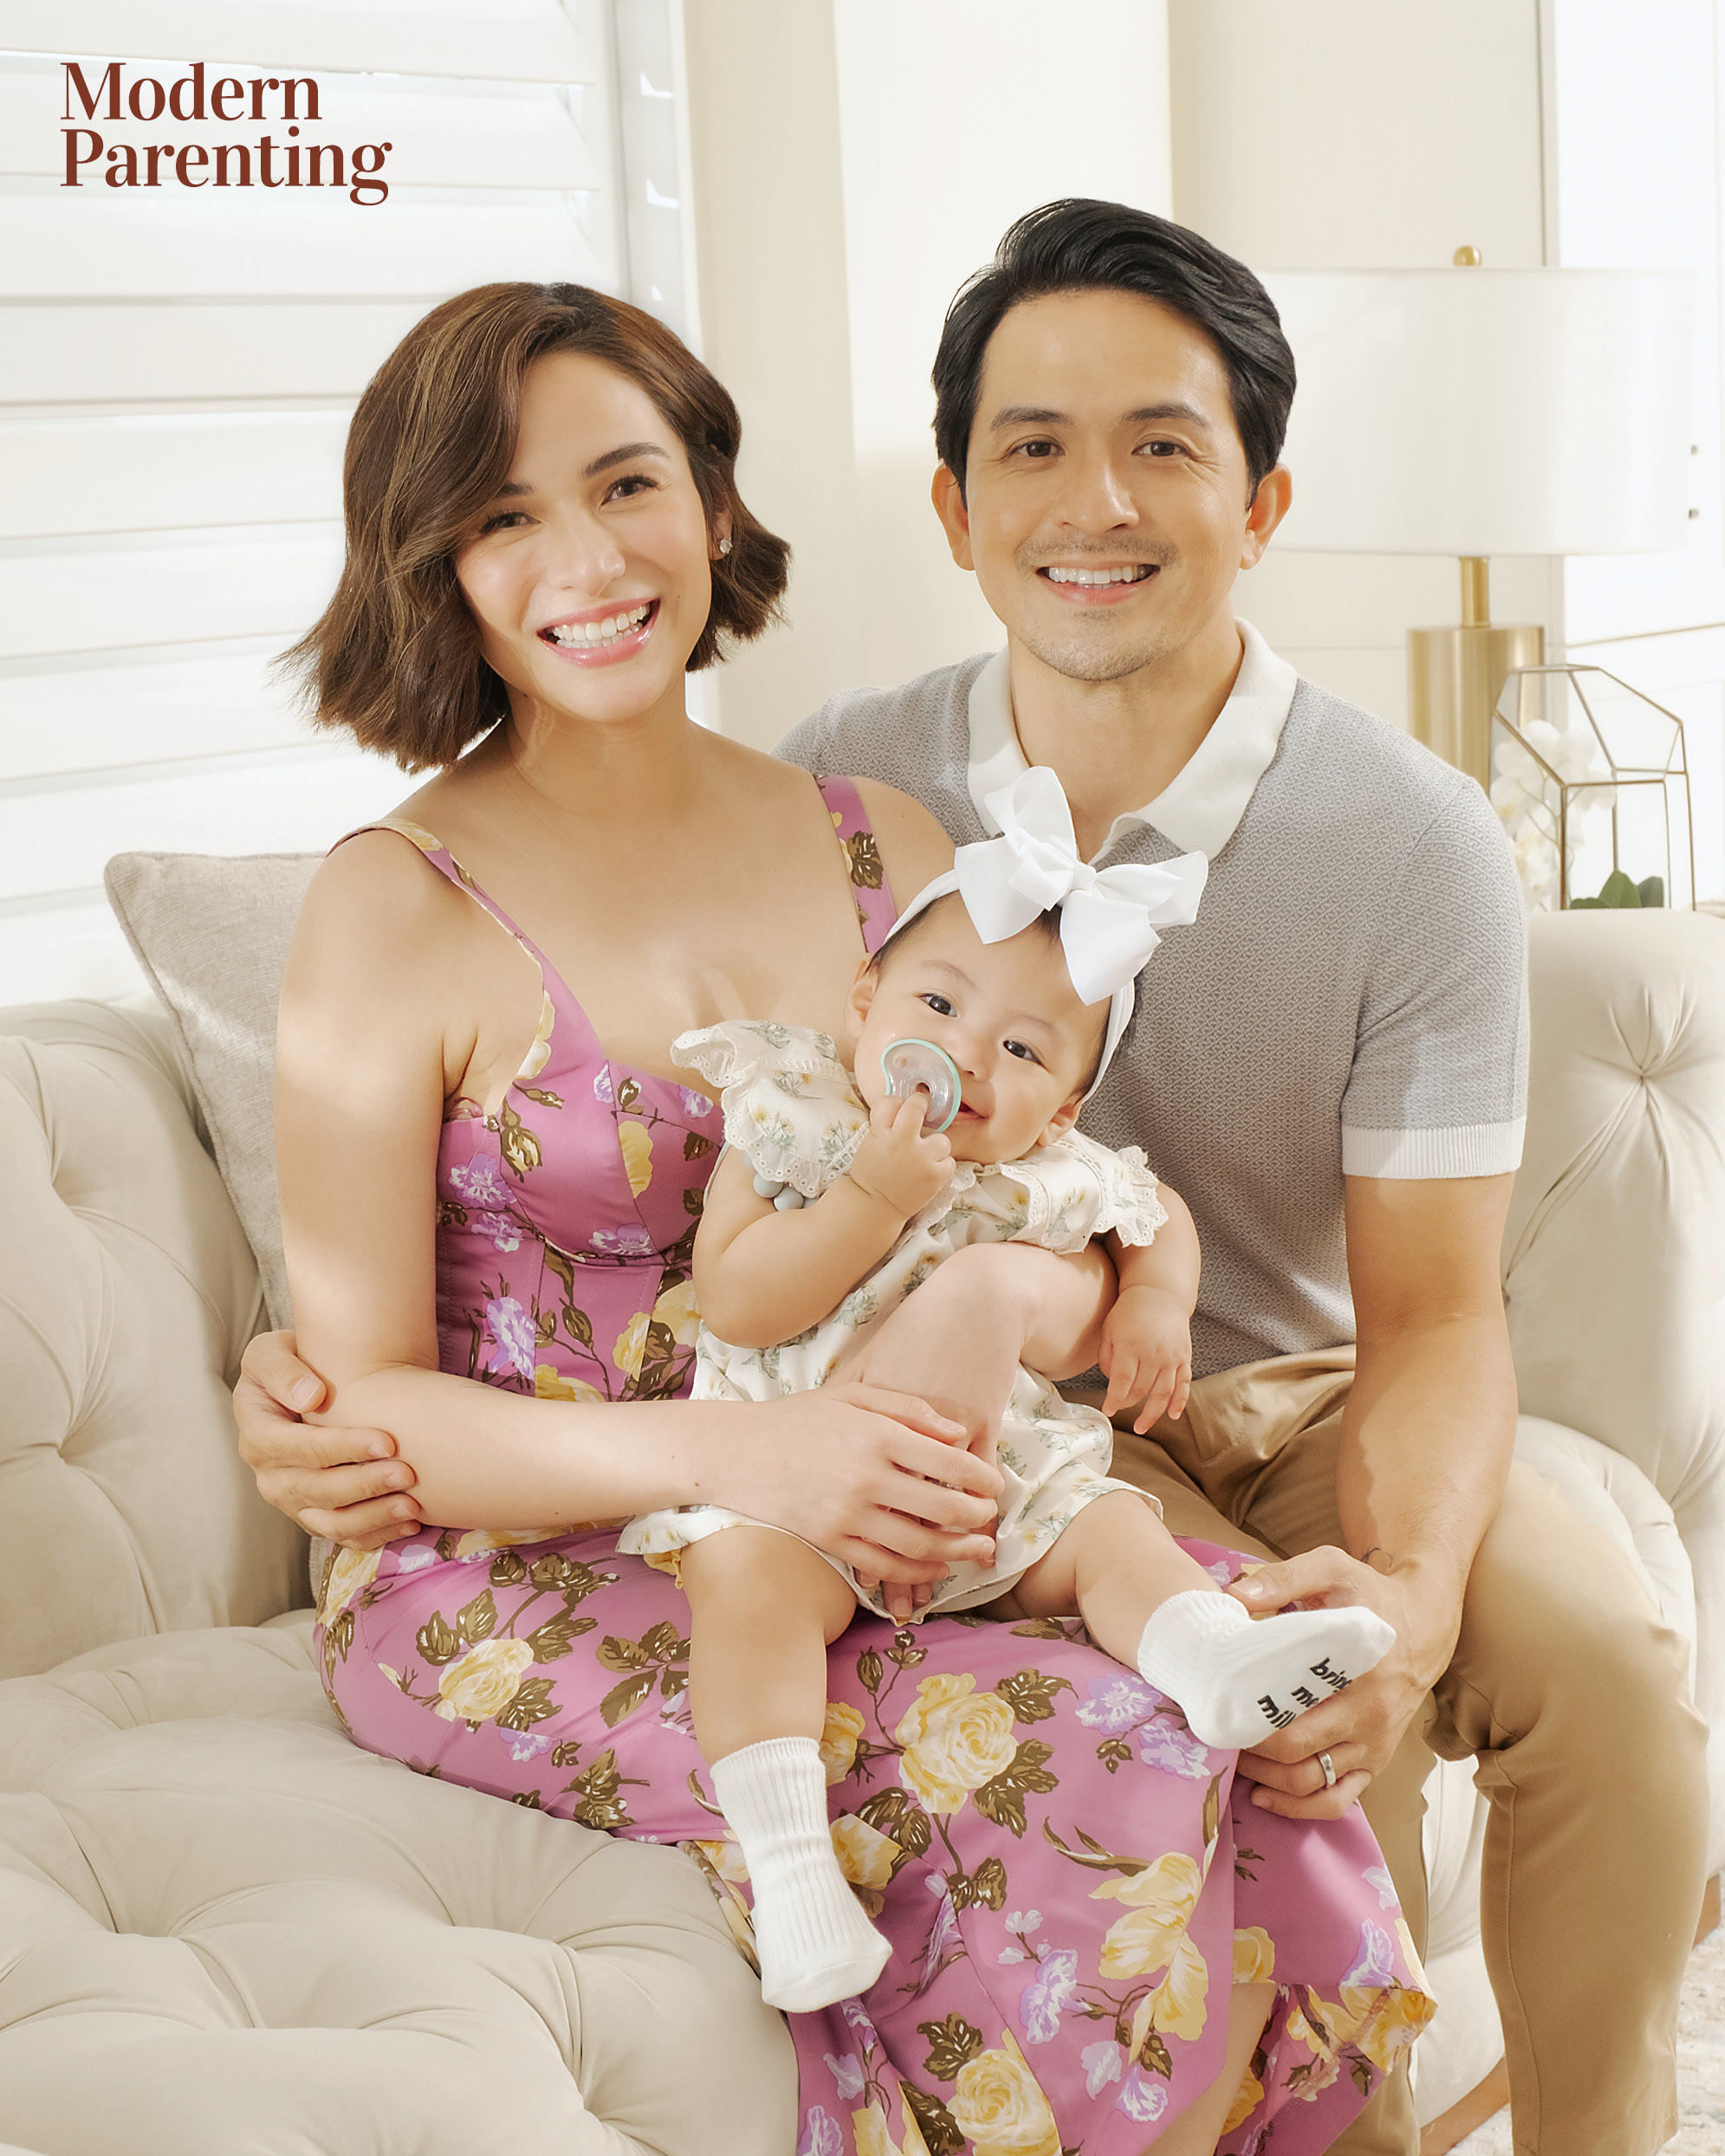 Dennis Trillo and Jennylyn Mercado co-parenting